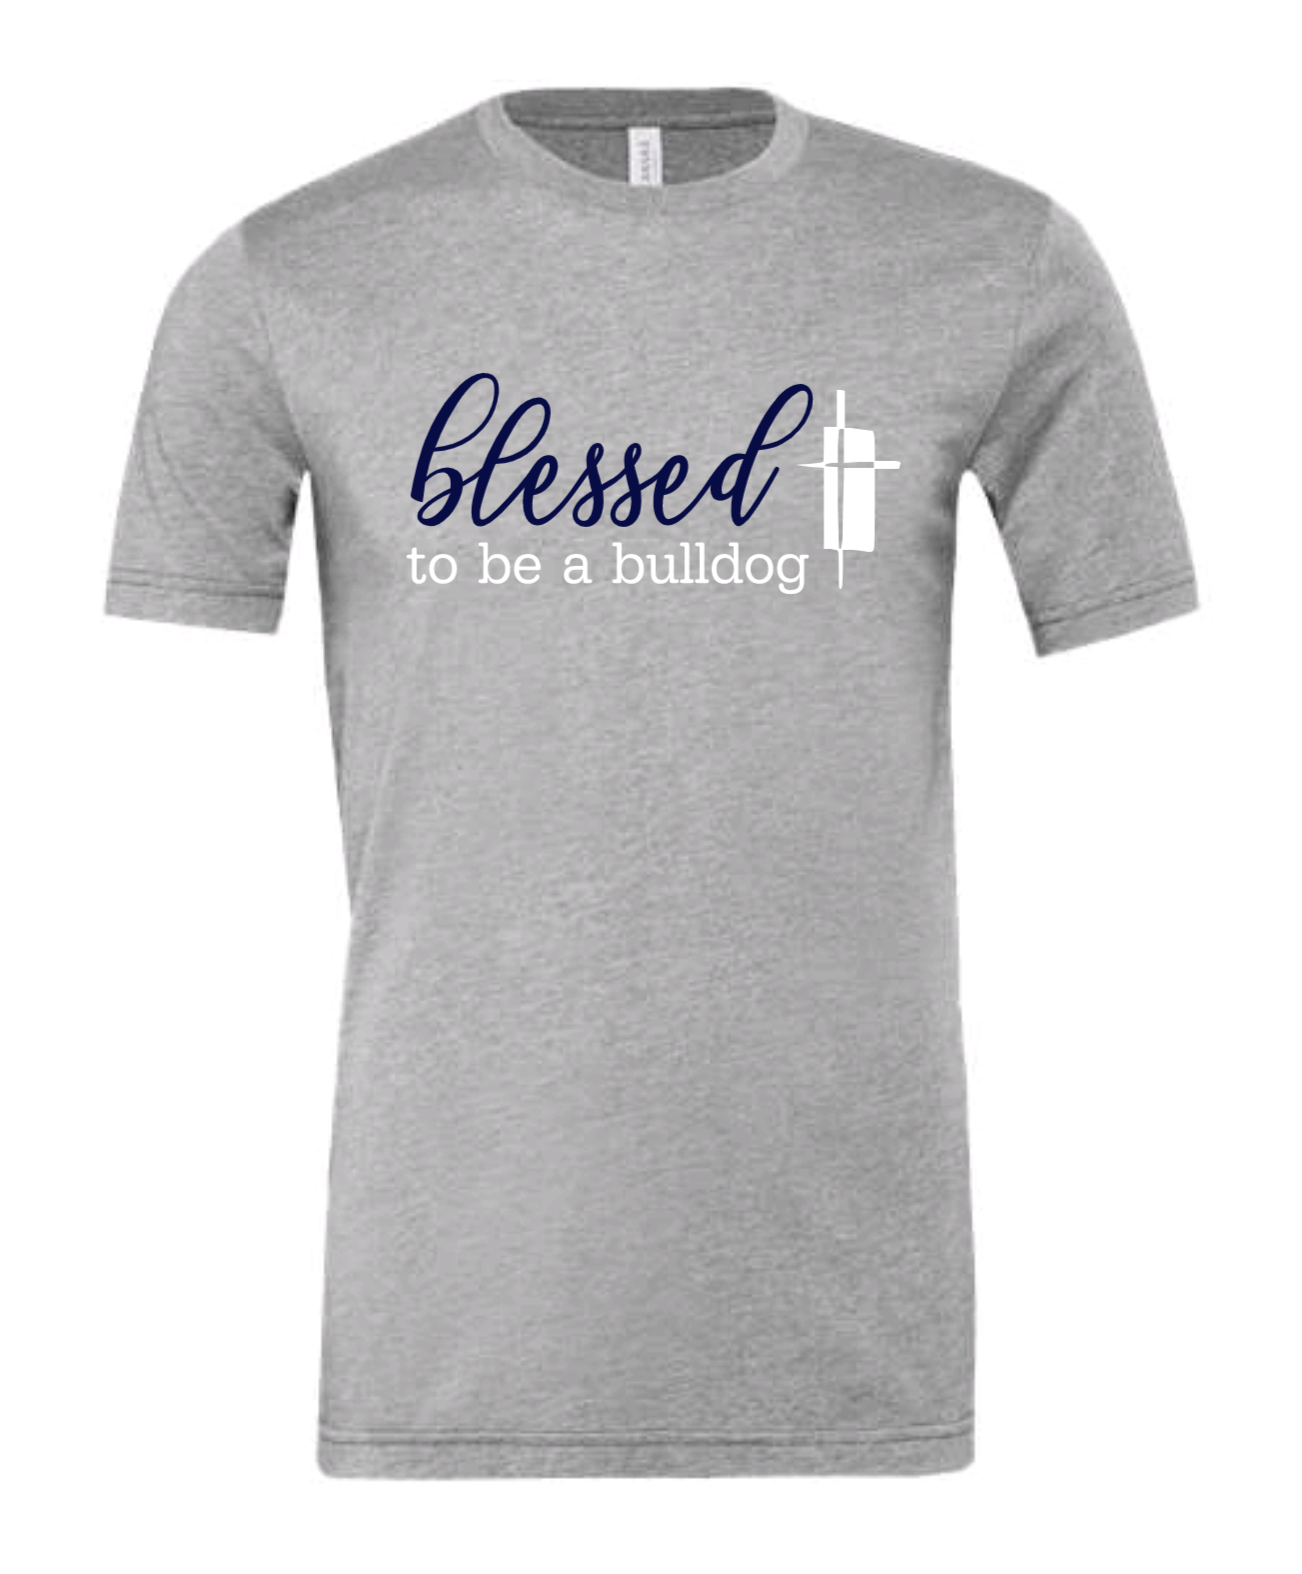 St. John Bosco Blessed to be a Bulldog Adult T-Shirt